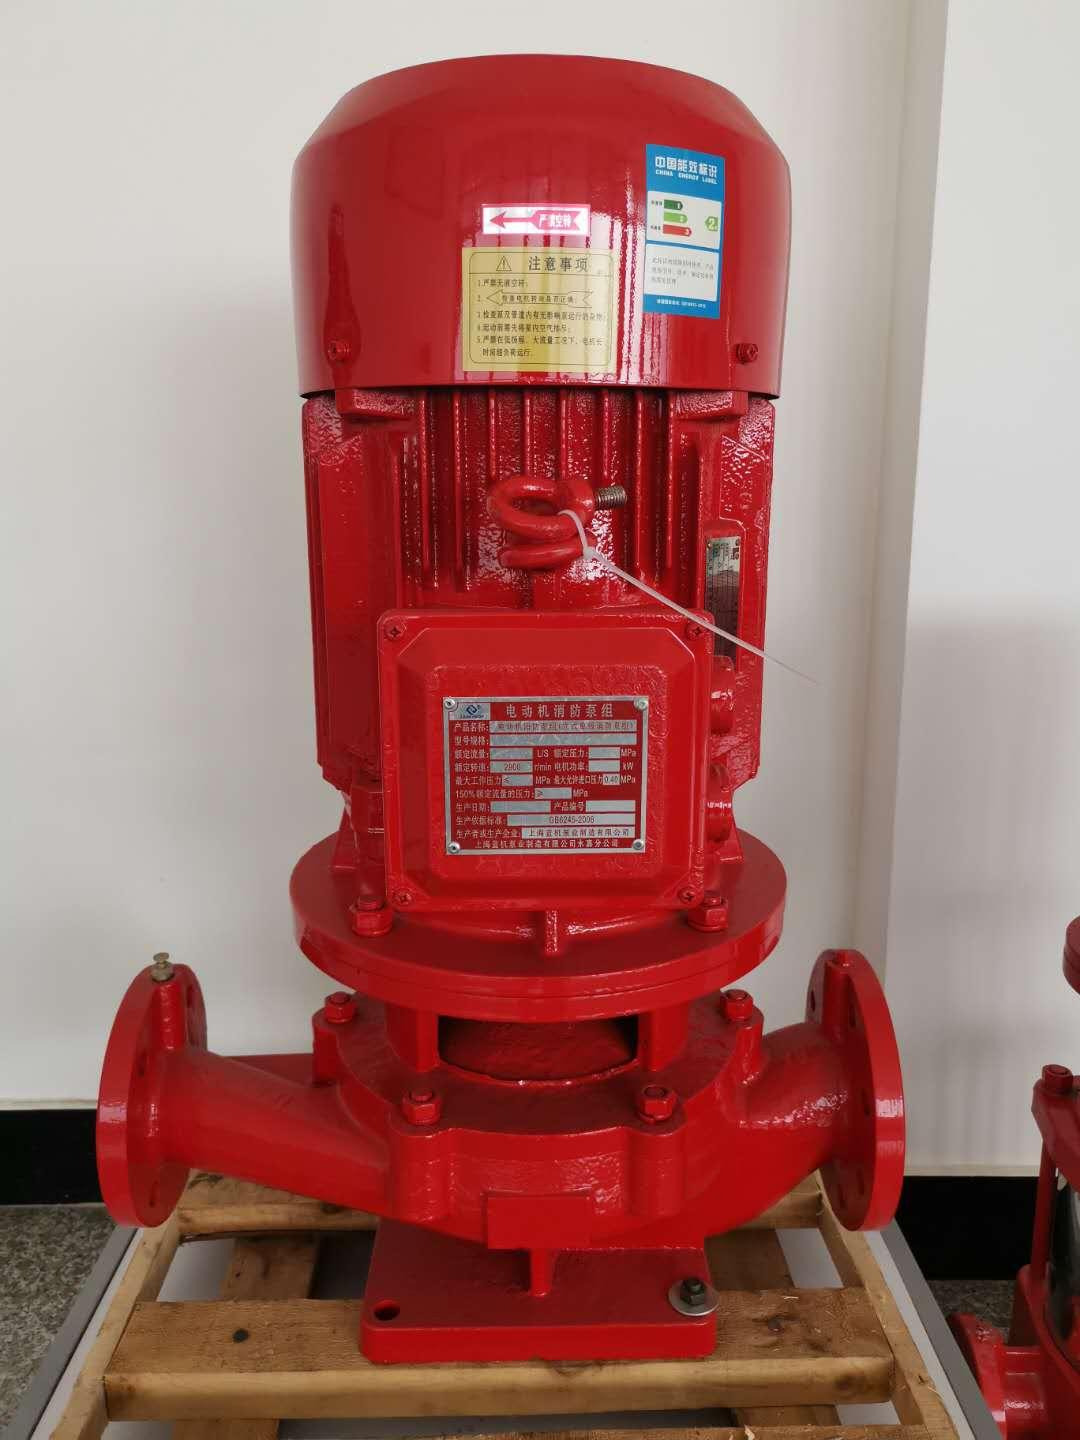 XBD消防泵北京消防设备厂家价格优惠